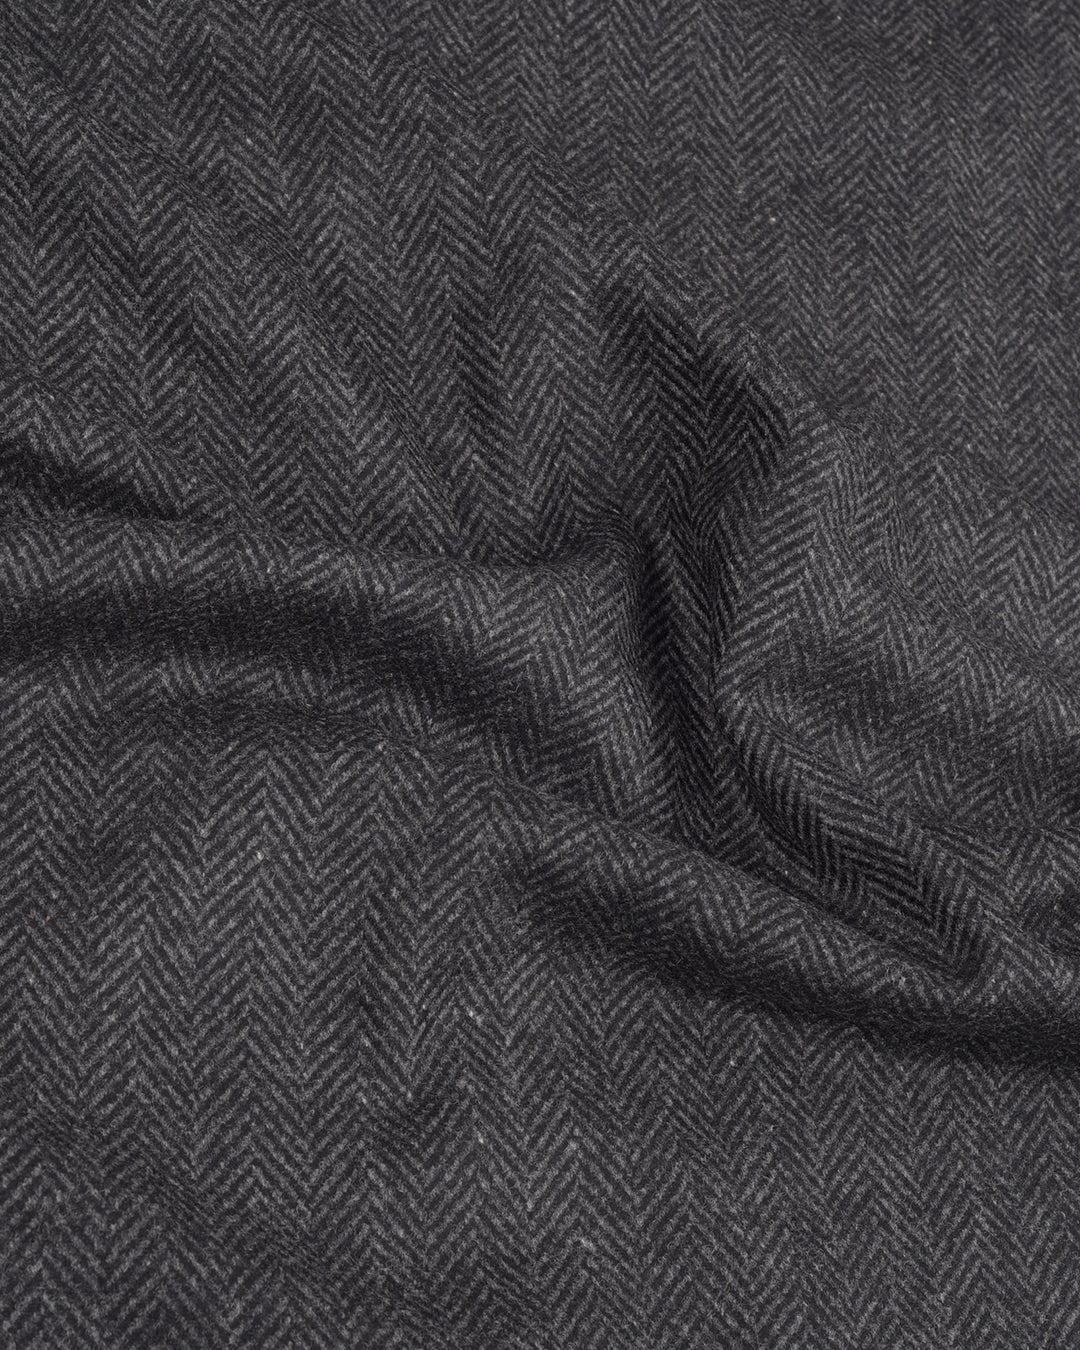 EThomas Wool Cashmere: Dark Grey Herringbone